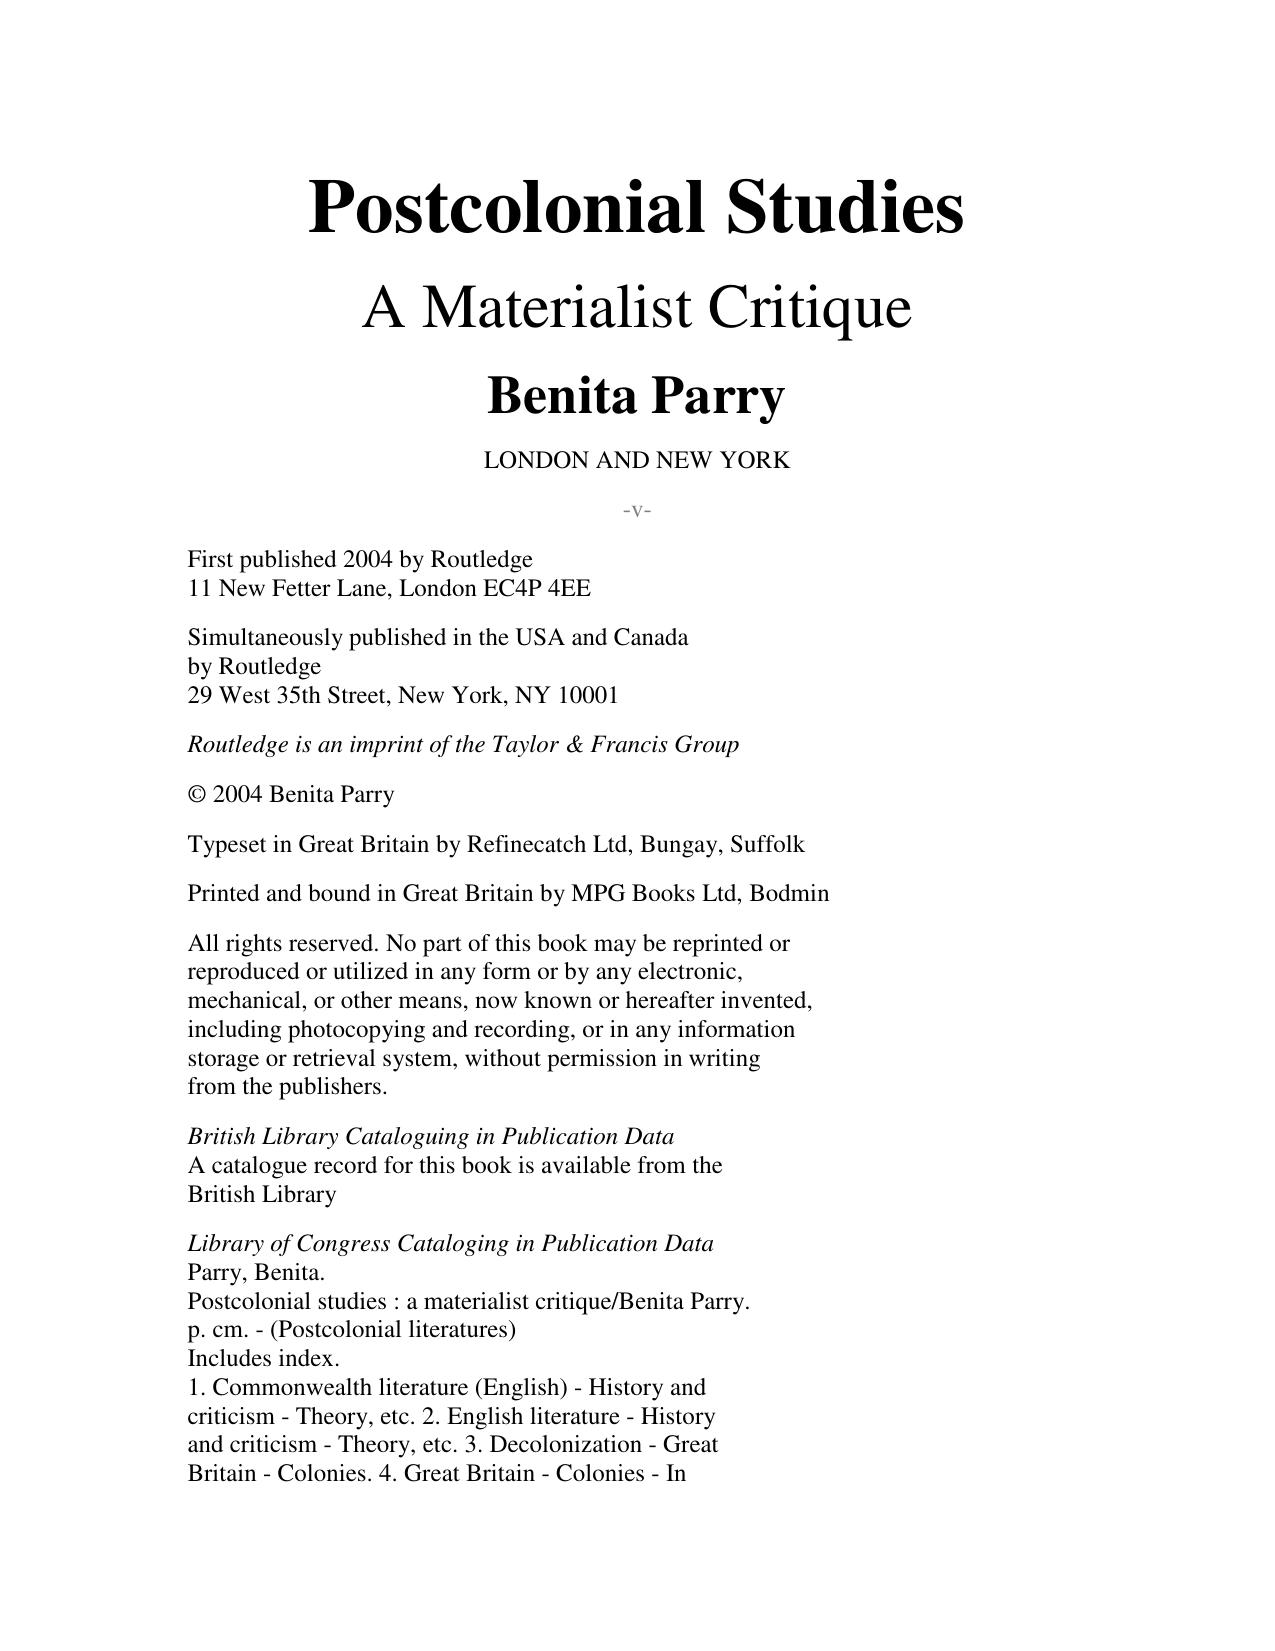 POSTCOLONIAL STUDIES A MATERIALIST CRITIQUE.rtf